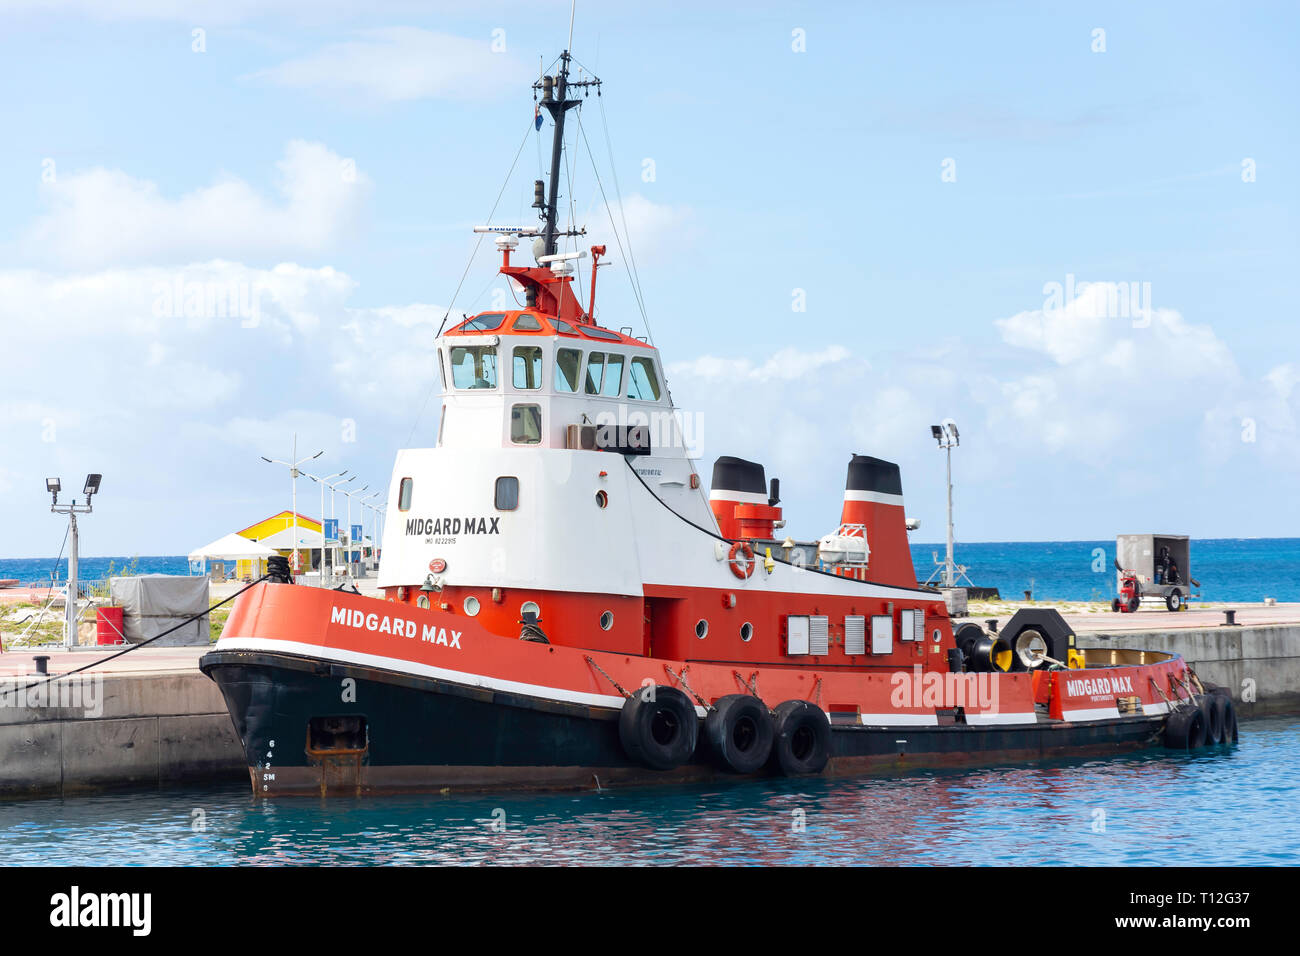 Midguard Max tug boat in harbour, Philipsburg, Sint Maarten, Saint Martin, Lesser Antilles, Caribbean Stock Photo